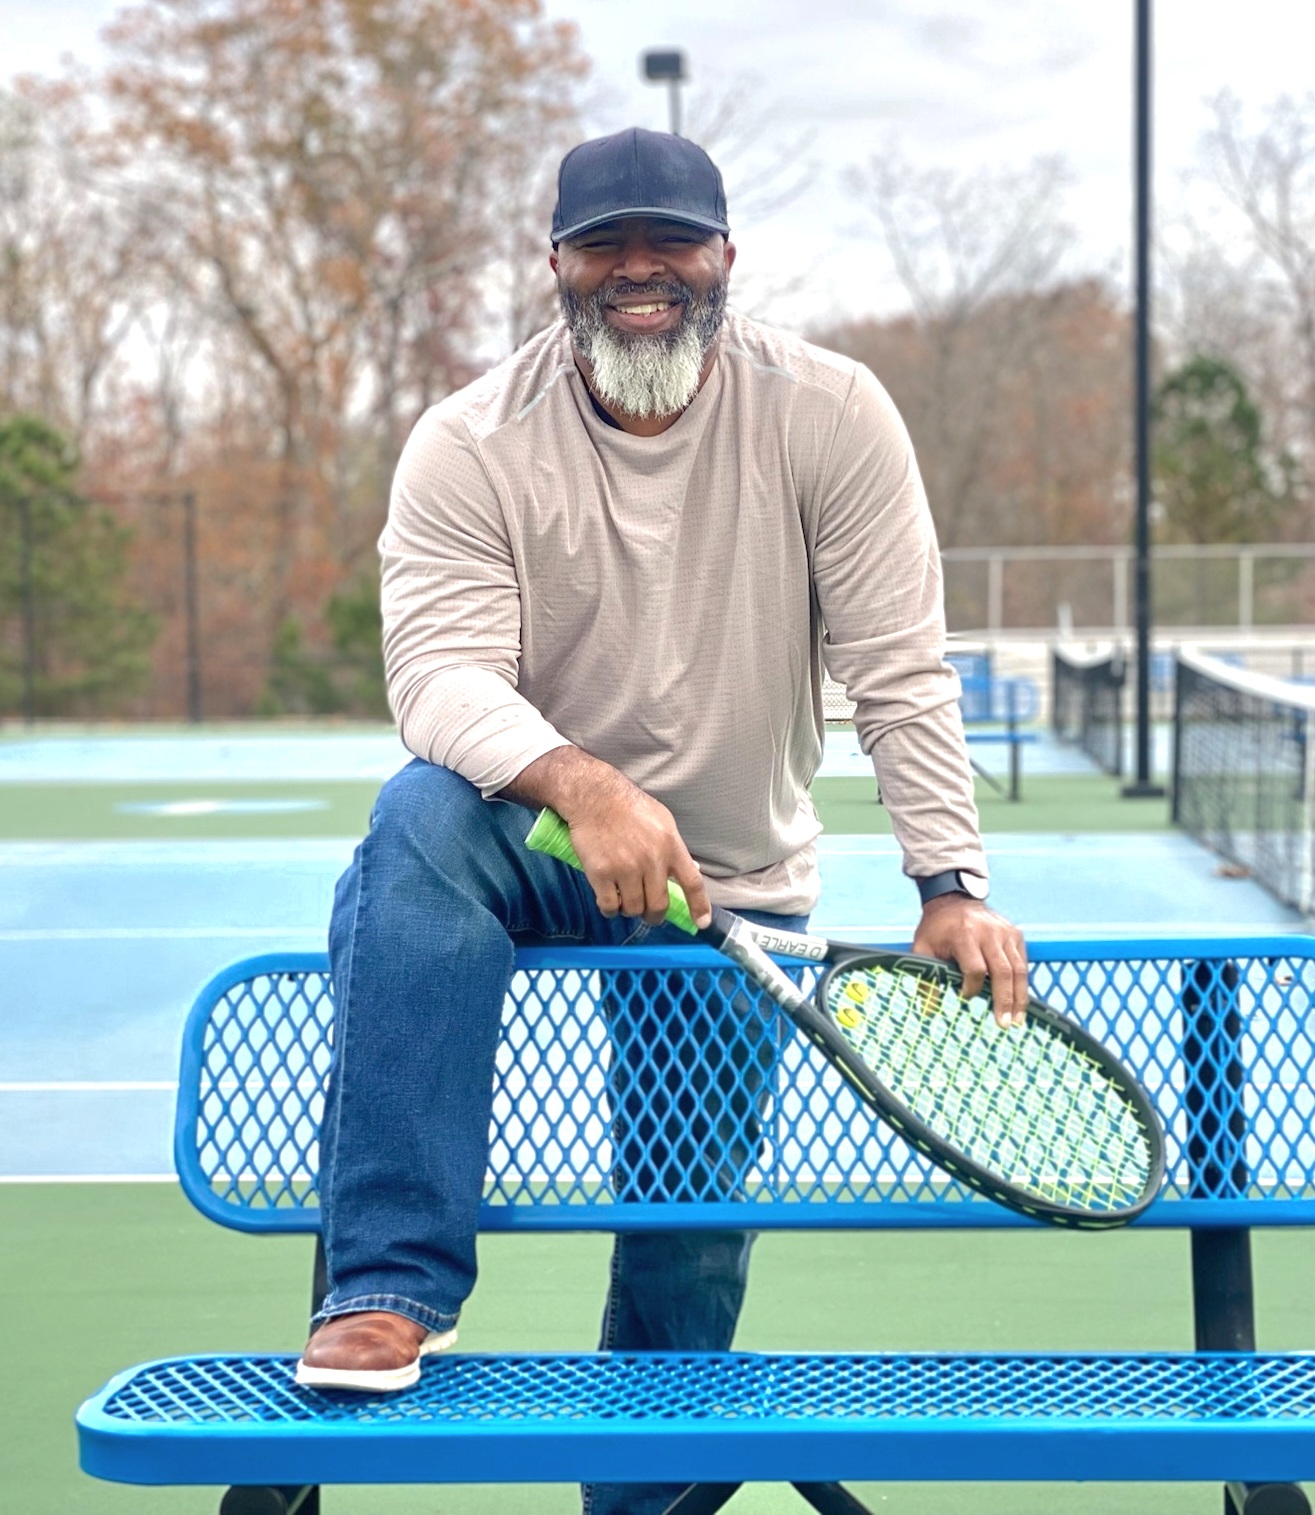 Darrell E. teaches tennis lessons in Central, SC